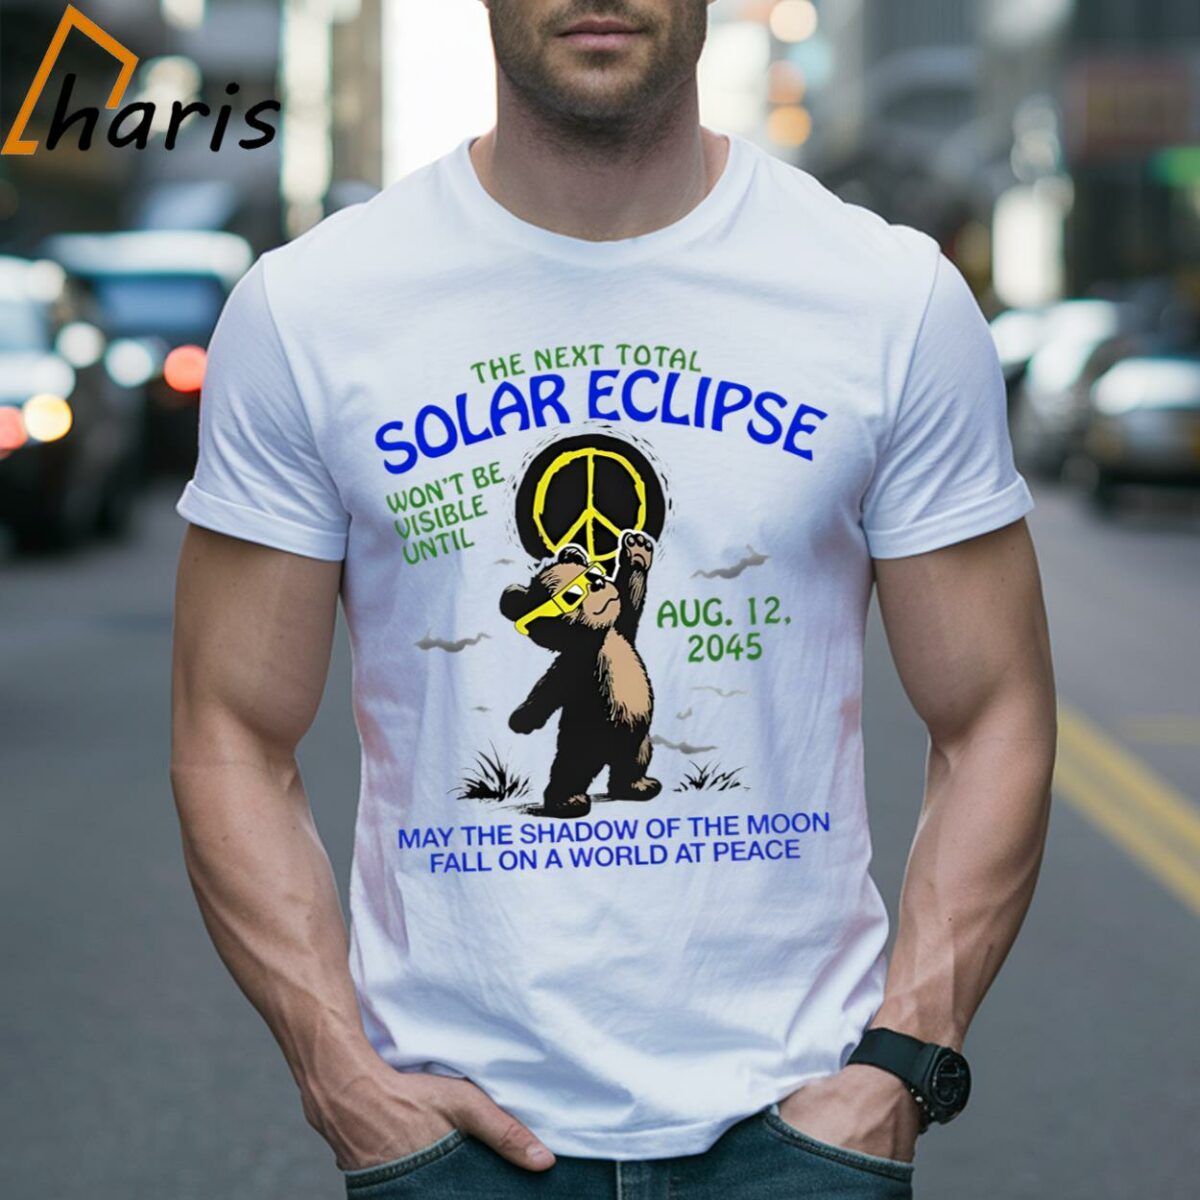 The Next Total Solar Eclipse Wont Be Visible Until Aug 12 2045 Shirt 2 Shirt